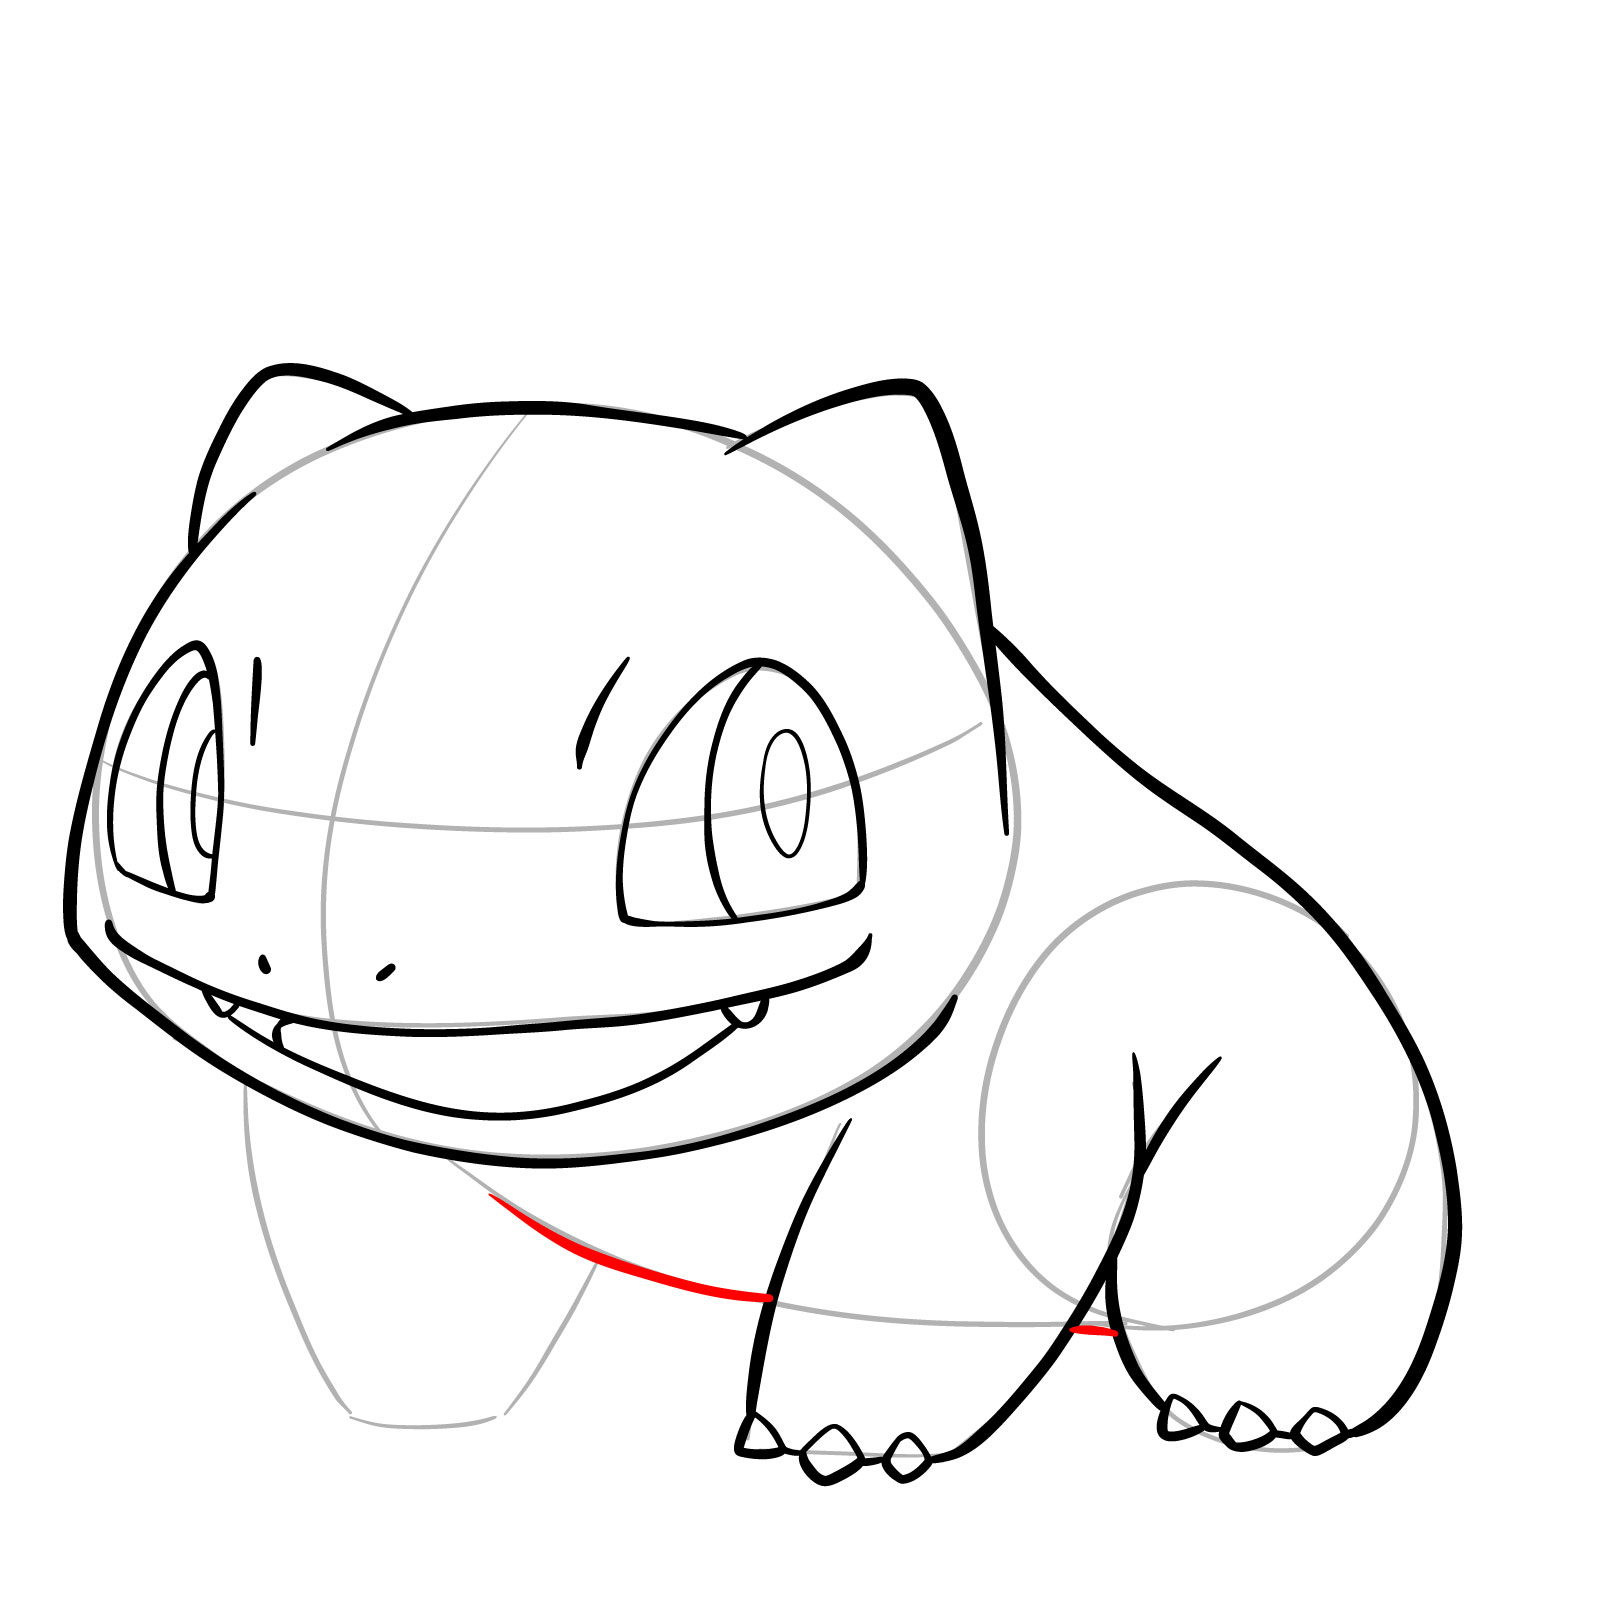 How to draw Bulbasaur - step 15